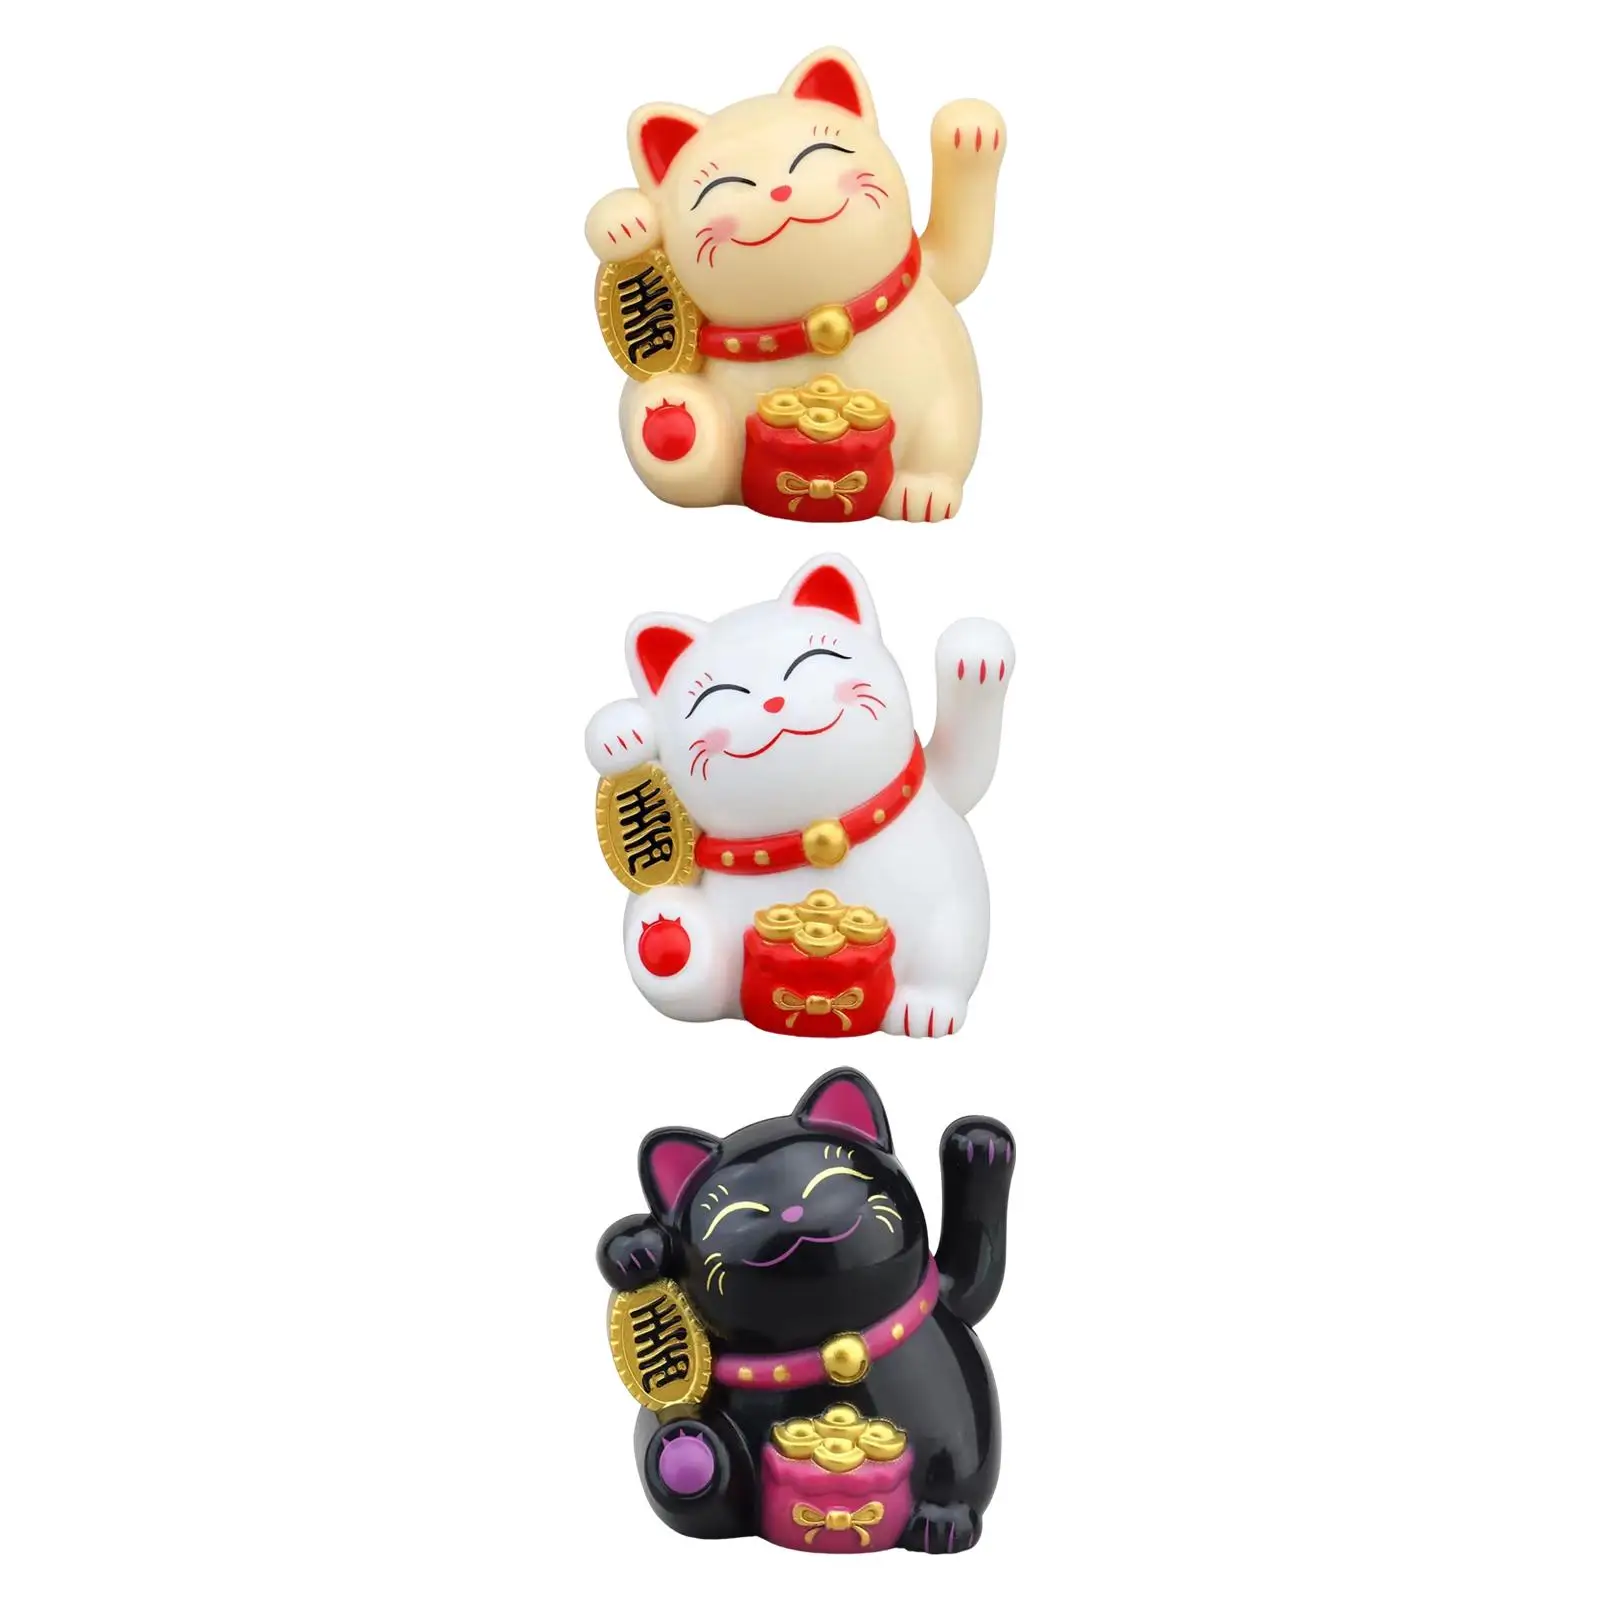 Cute Cat with Waving Arm Small Cat Figurines Feng Shui Ornament for Desktop Shelf Living Room Decoration Car Dashboard Decor